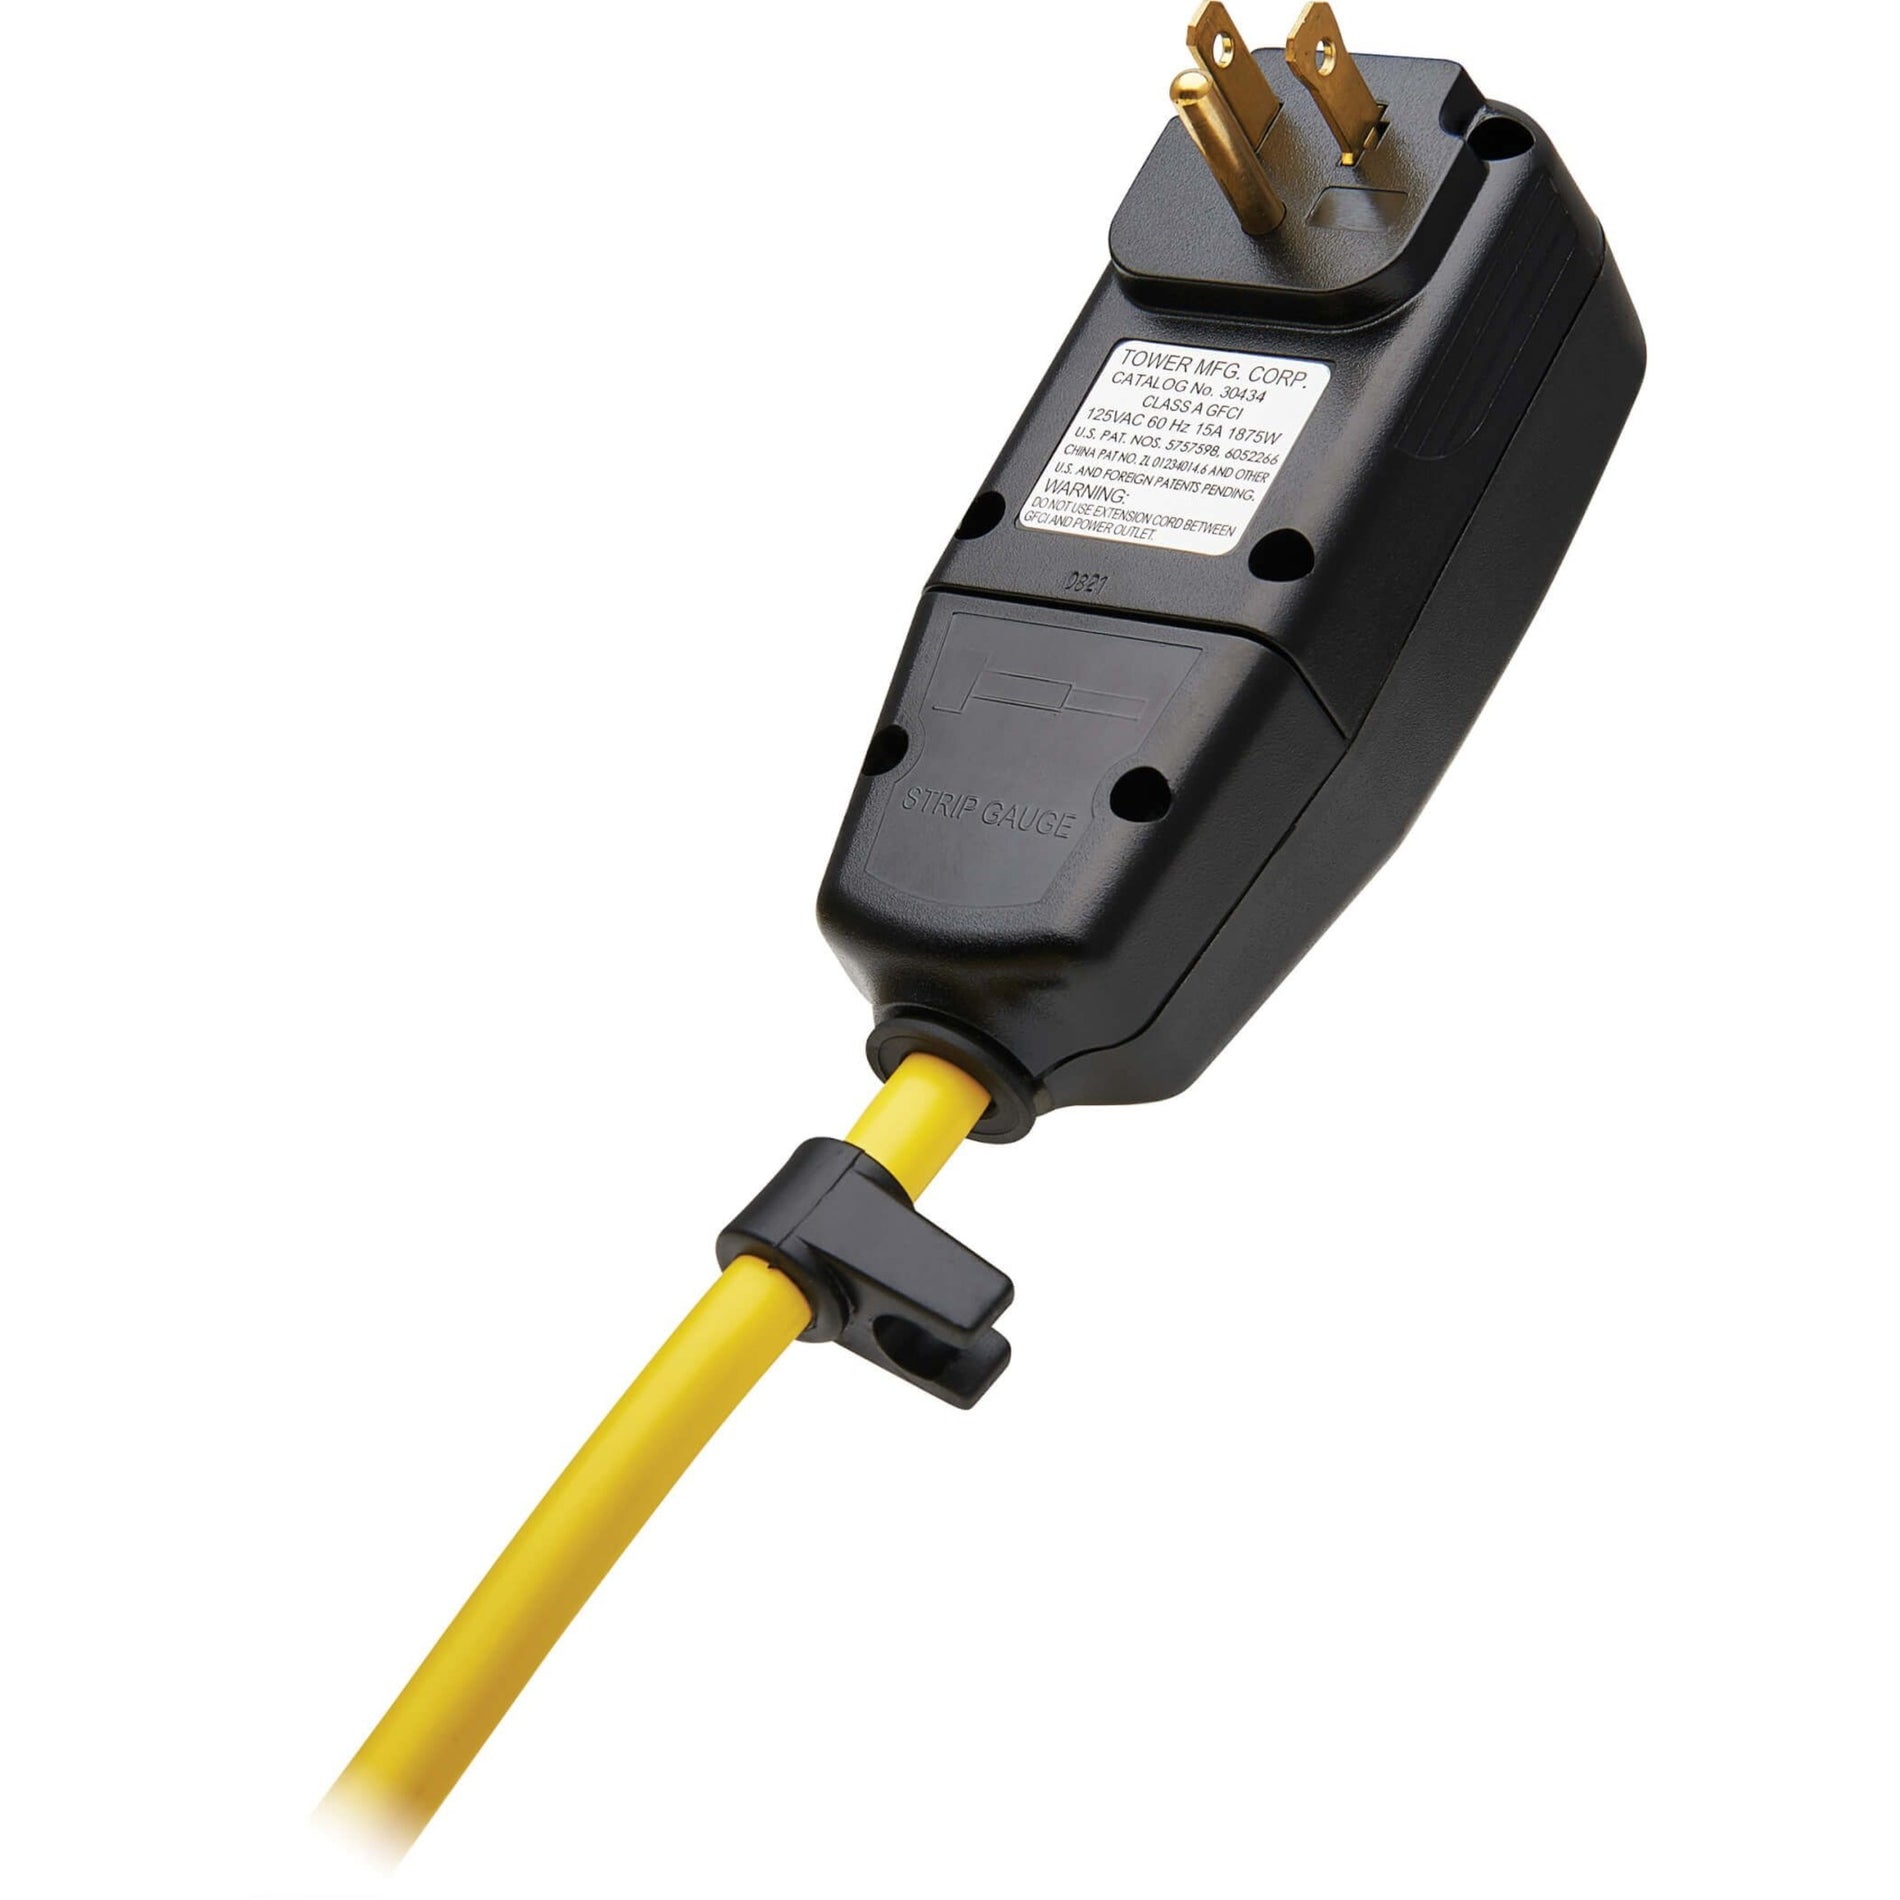 Tripp Lite TLM609GF POWER IT! Safety Power Strip, 6 Outlets, OSHA Yellow, 9ft Cord